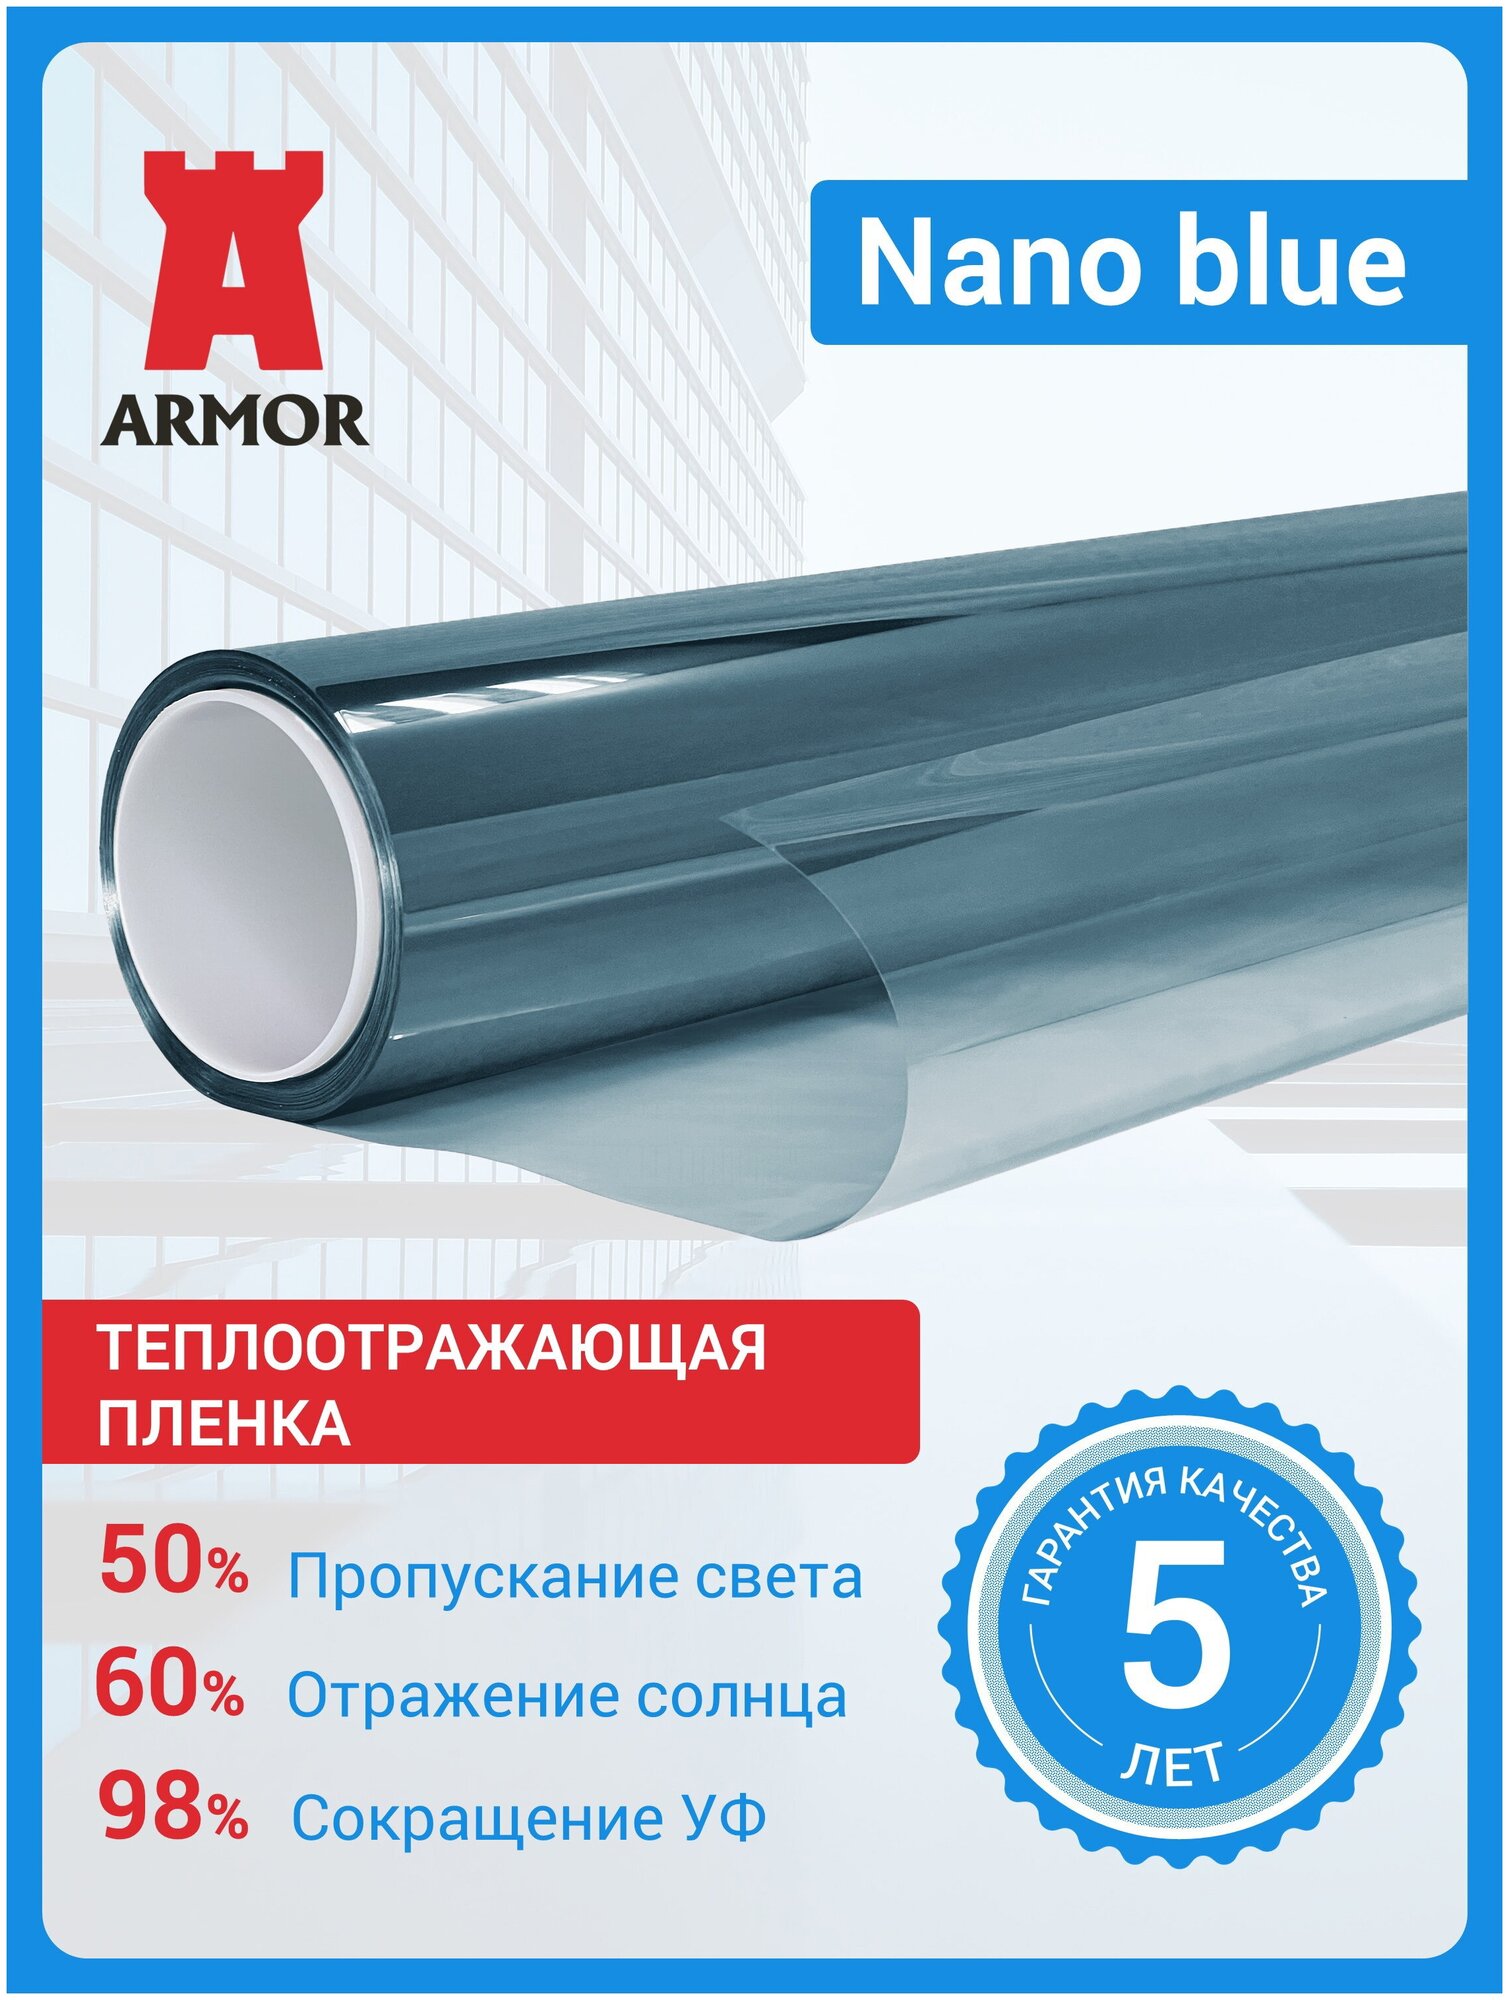 Самоклеящаяся теплоотражающая пленка для окон Nano Blue, цвет - голубой, размер 0,75 м. х 5 м. (75х500см)